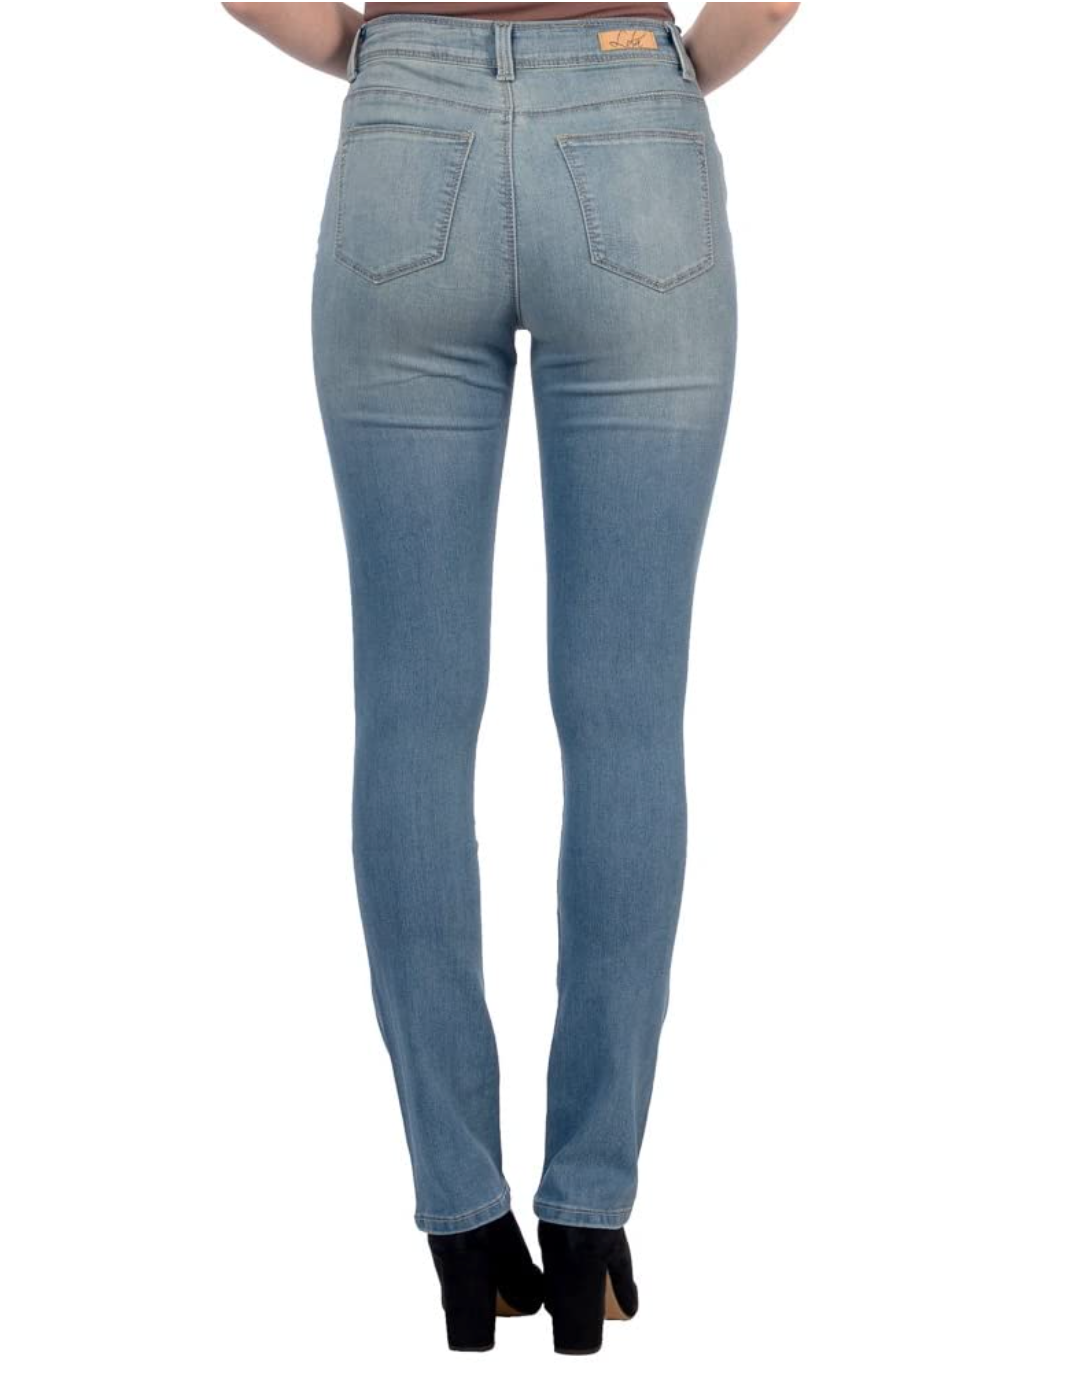 Jeans - Kate - Medium Blue Stretch Denim